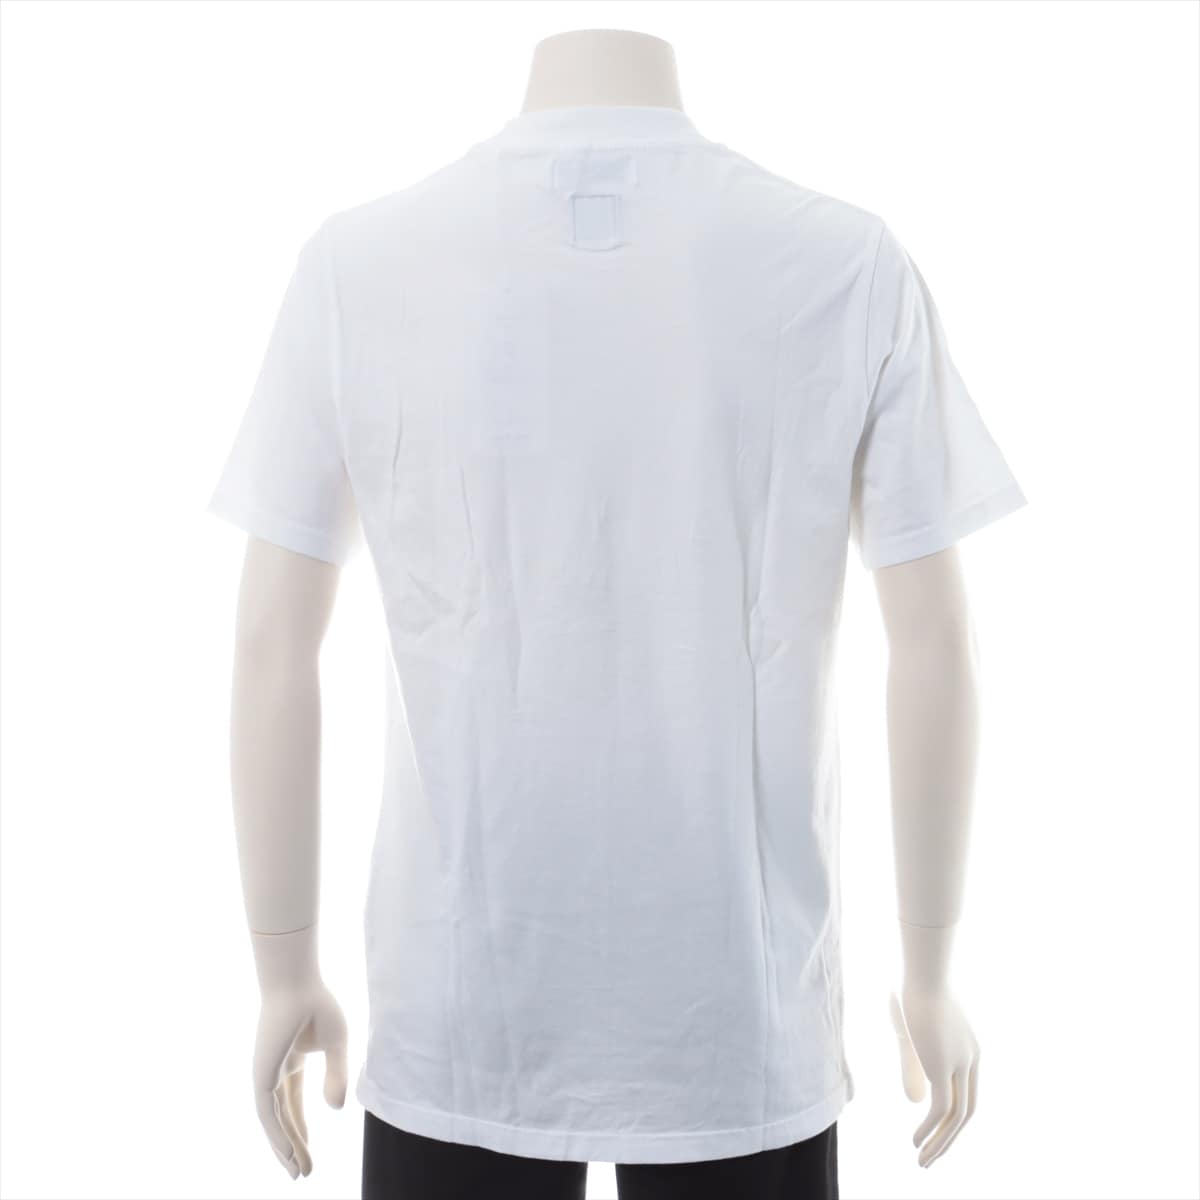 Facetasm Cotton T-shirt 5 Men's White